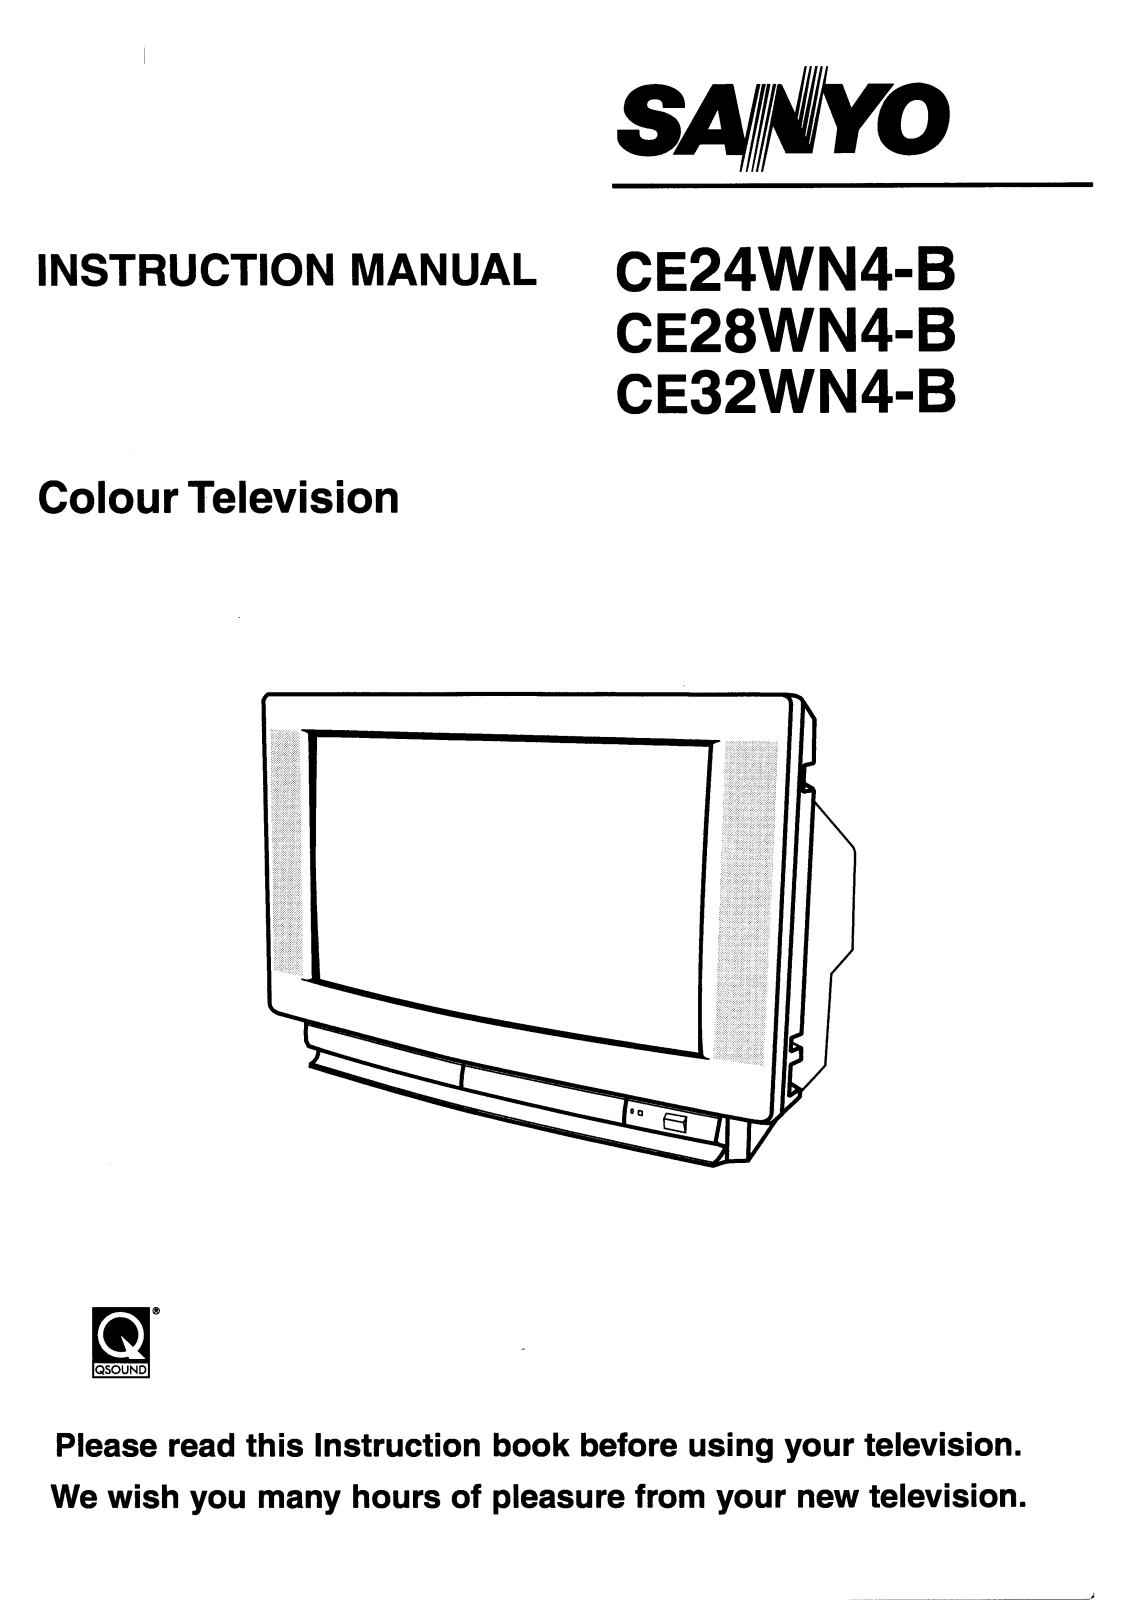 Sanyo CE24WN4-B, CE28WN4-B Instruction Manual